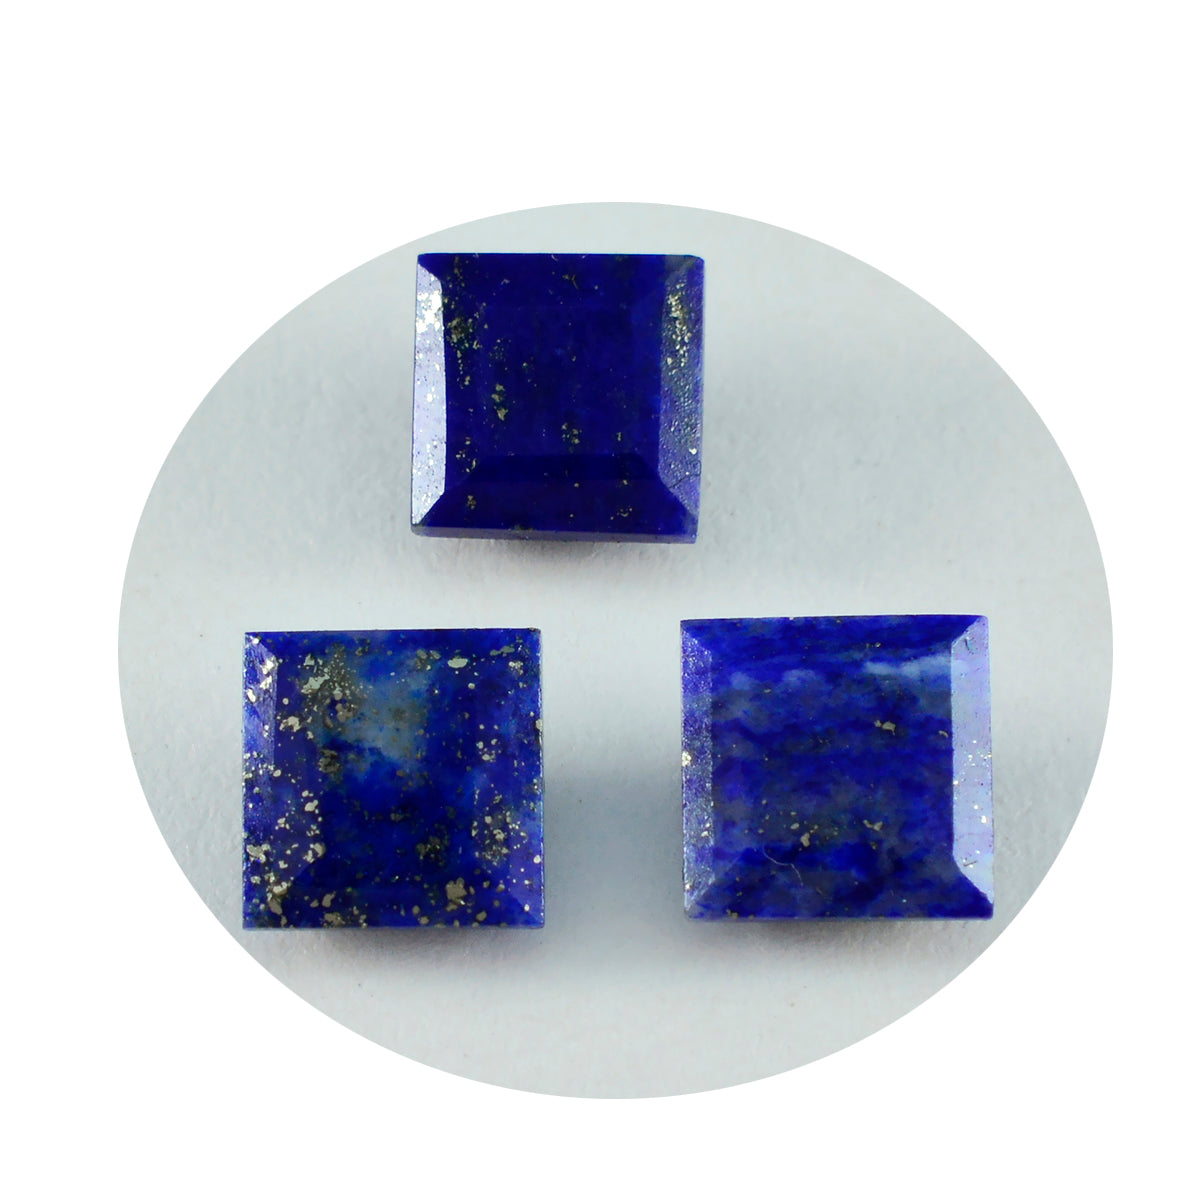 Riyogems 1PC Echte Blauwe Lapis Lazuli Facet 10x10 mm Vierkante Vorm mooie Kwaliteit Losse Edelsteen